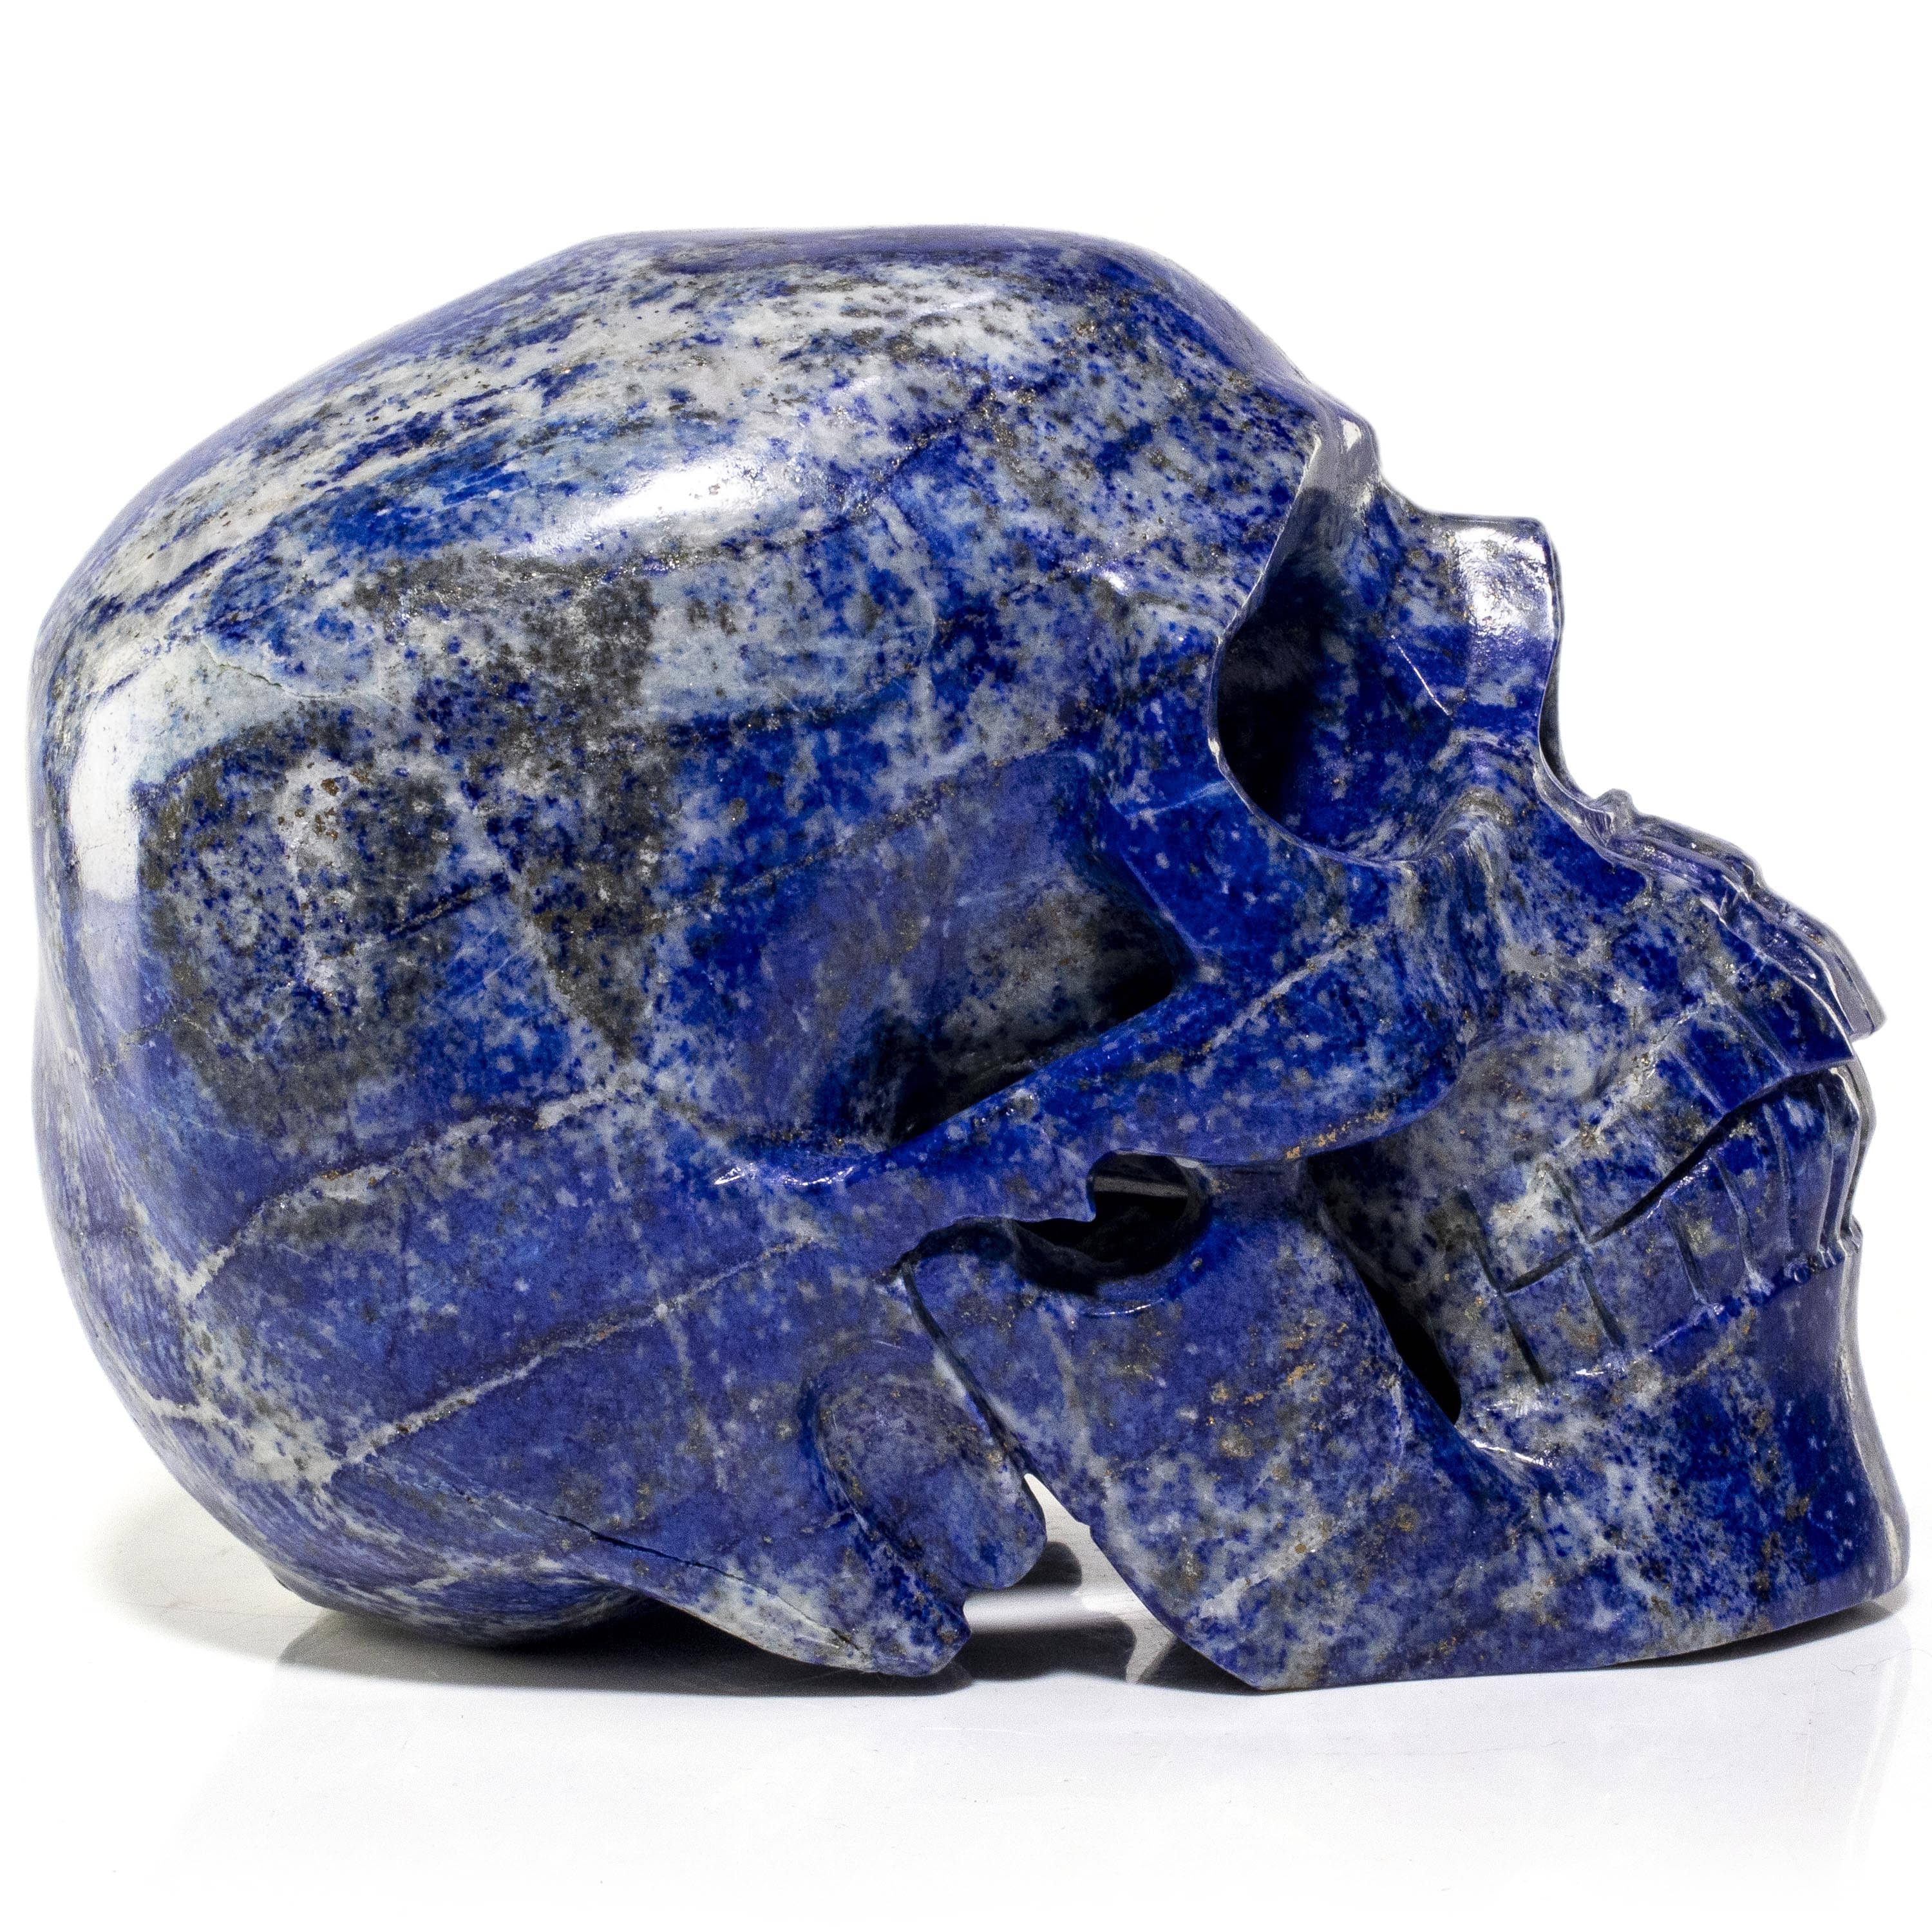 Kalifano Lapis Lapis Skull Carving 6" / 2,707g SK9600-LP.001